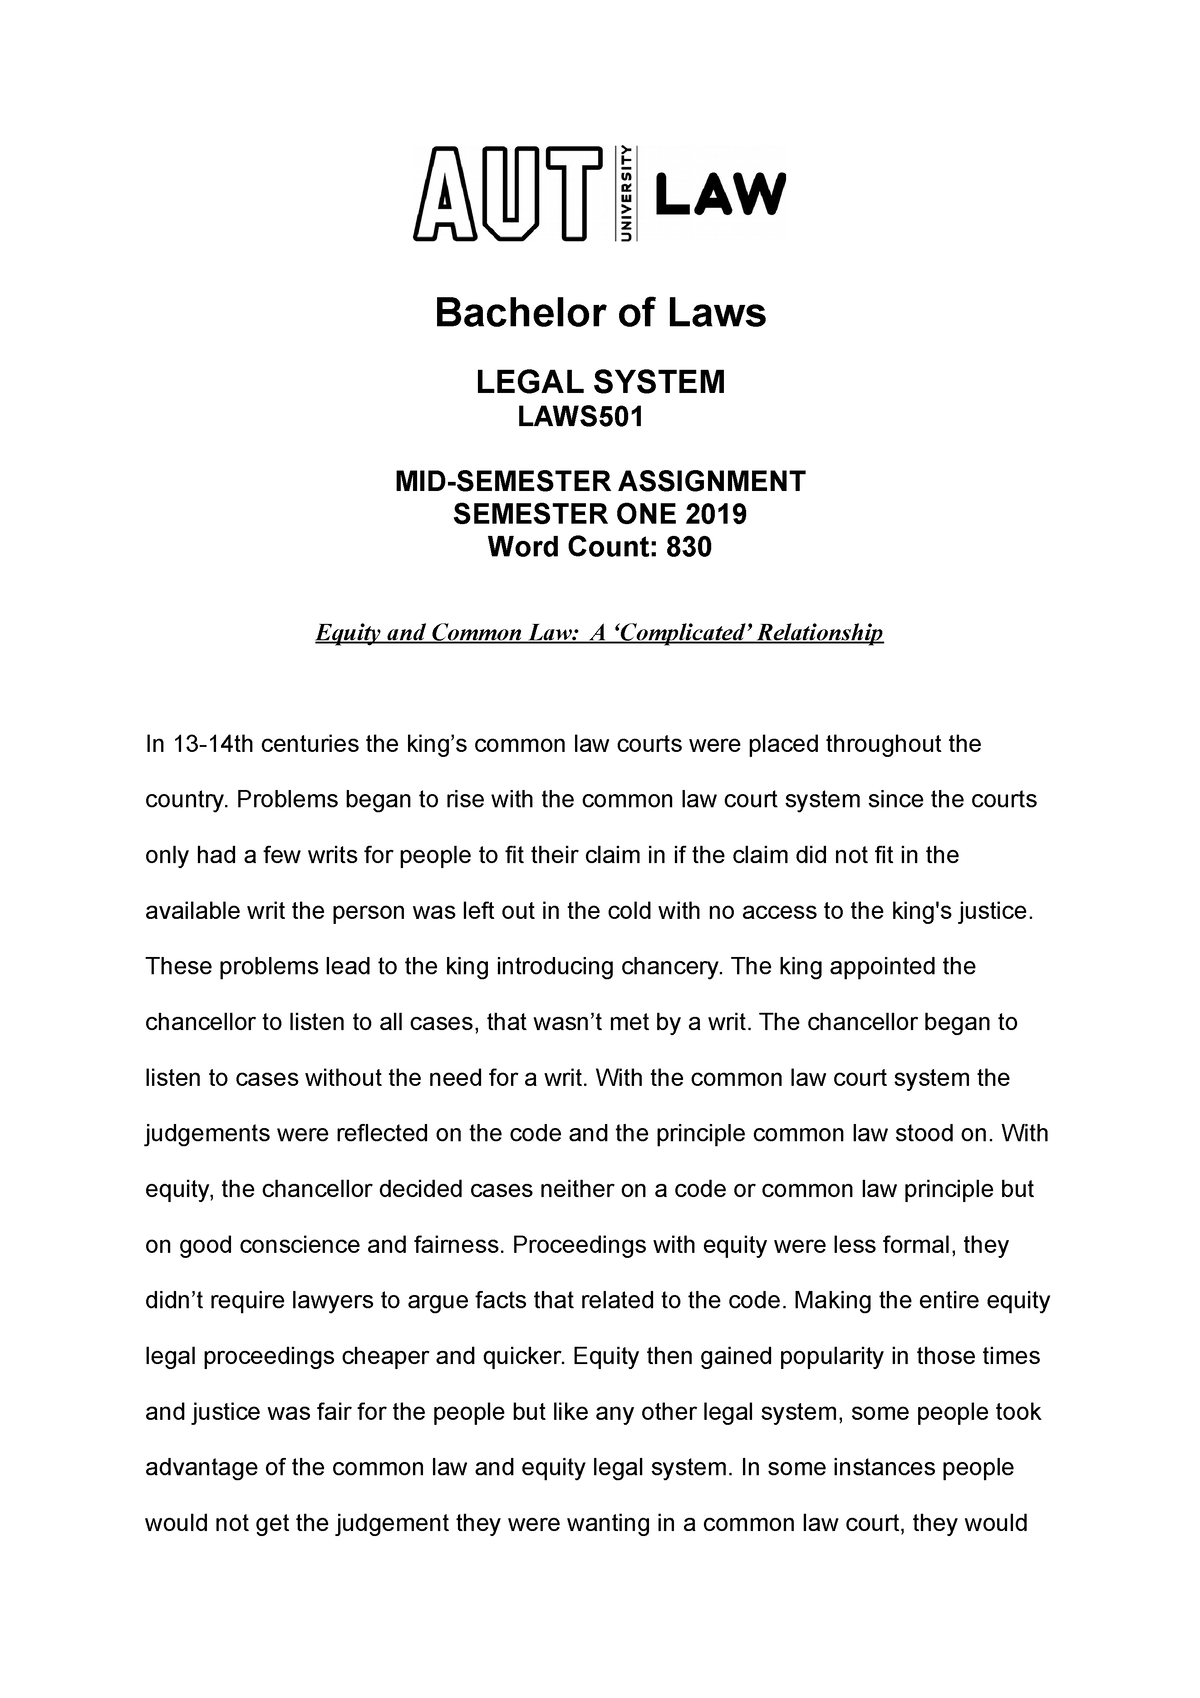 common law essay example